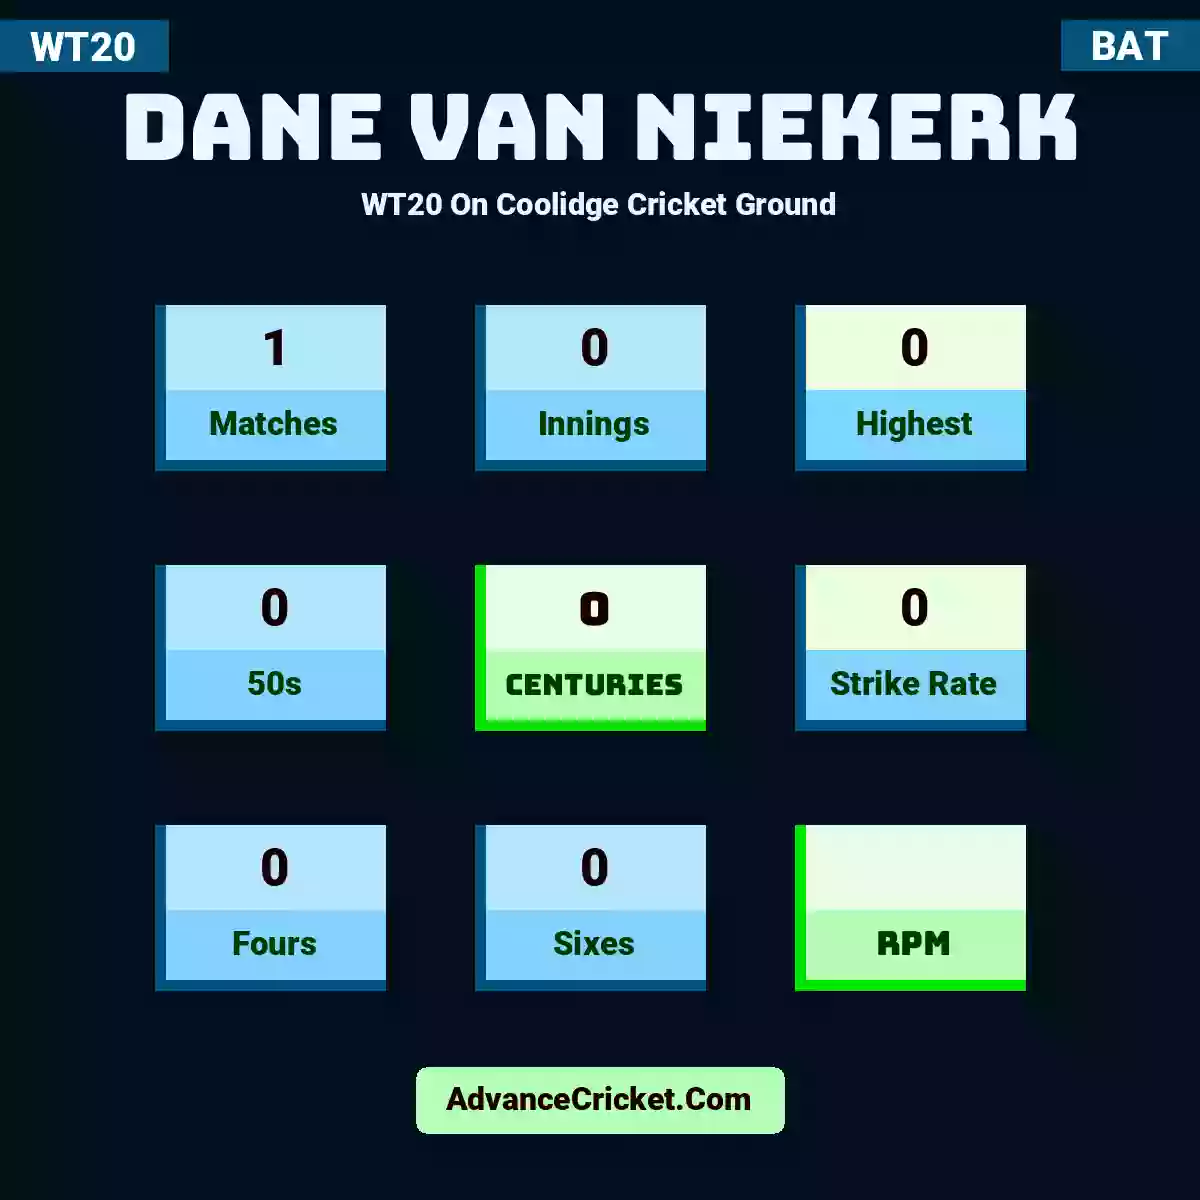 Dane van Niekerk WT20  On Coolidge Cricket Ground, Dane van Niekerk played 1 matches, scored 0 runs as highest, 0 half-centuries, and 0 centuries, with a strike rate of 0. D.Niekerk hit 0 fours and 0 sixes.